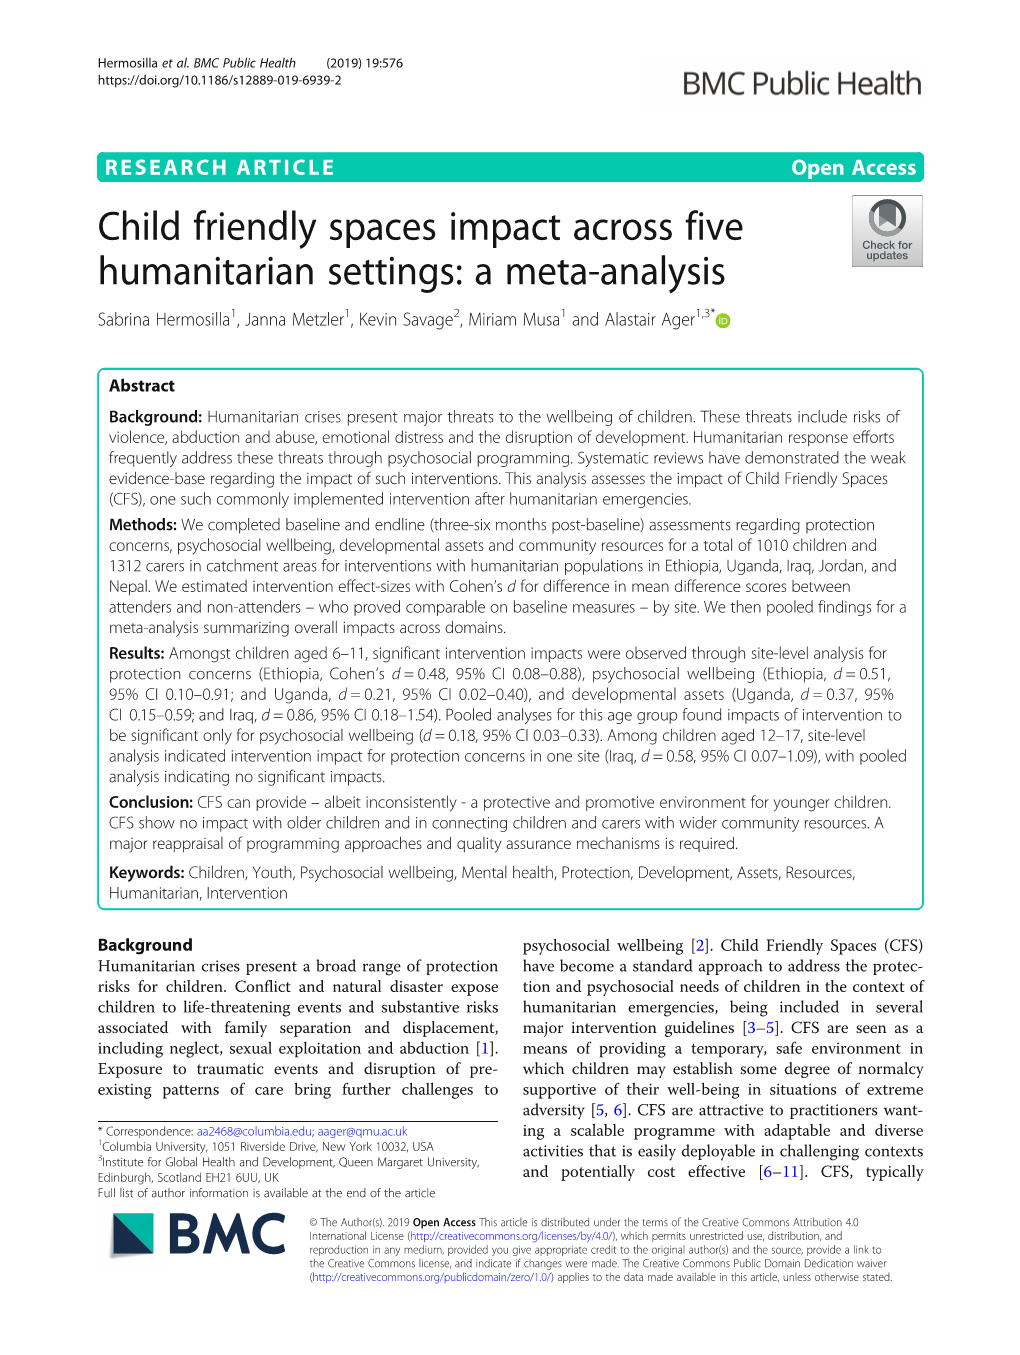 Child Friendly Spaces Impact Across Five Humanitarian Settings: a Meta-Analysis Sabrina Hermosilla1, Janna Metzler1, Kevin Savage2, Miriam Musa1 and Alastair Ager1,3*